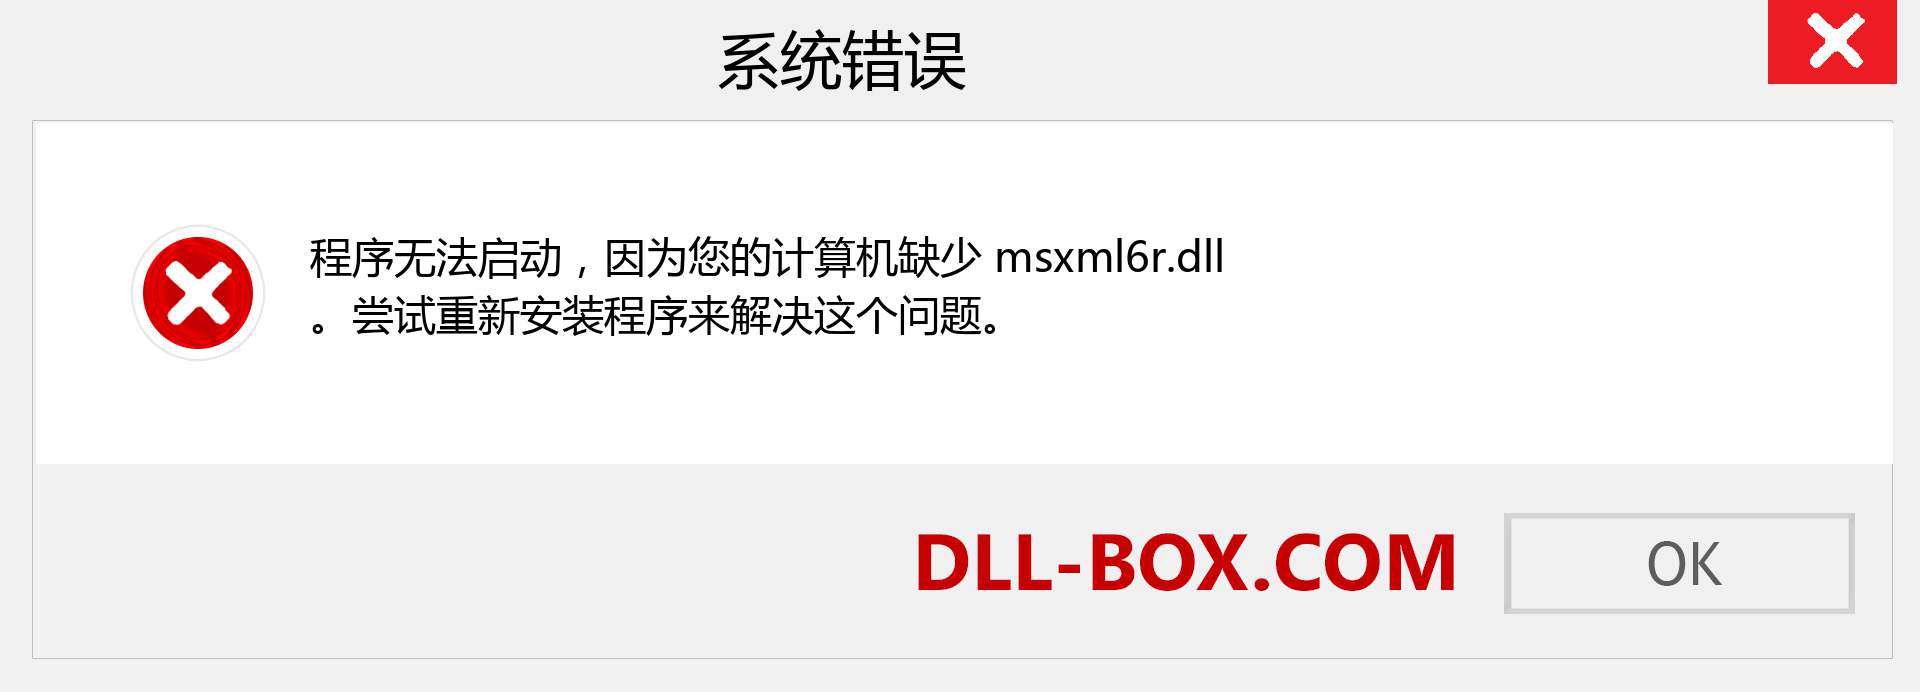 msxml6r.dll 文件丢失？。 适用于 Windows 7、8、10 的下载 - 修复 Windows、照片、图像上的 msxml6r dll 丢失错误